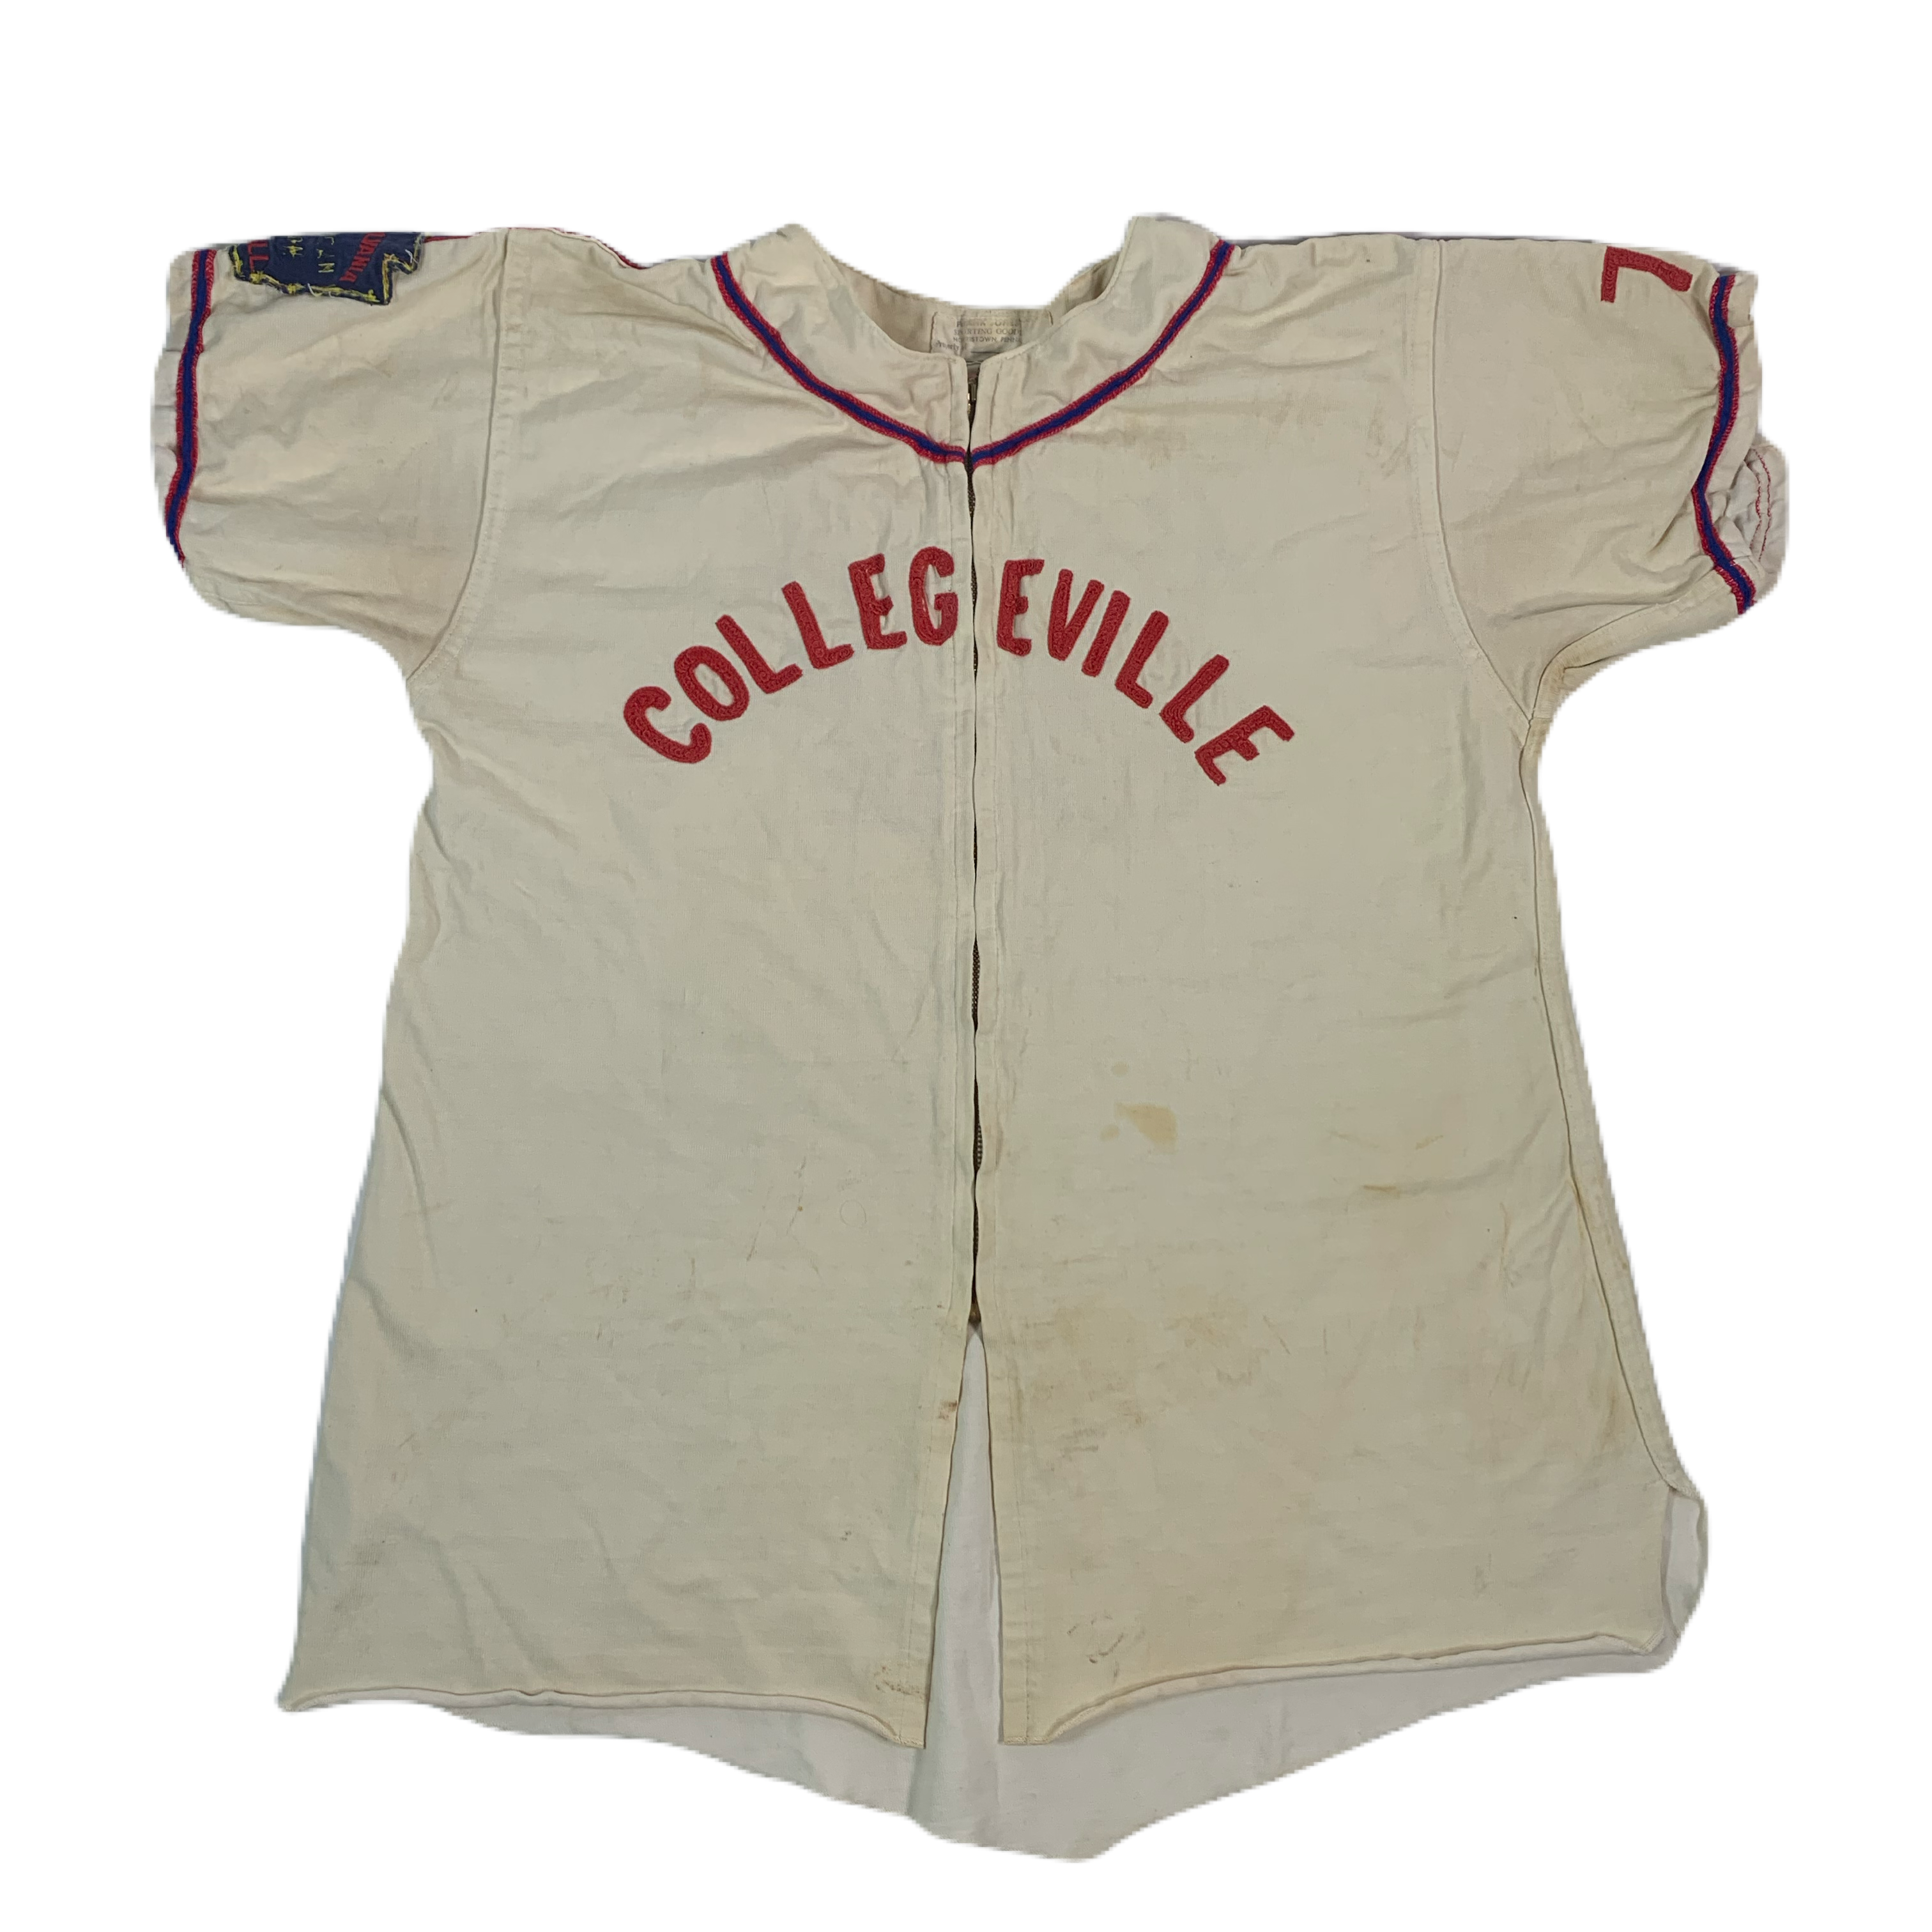 Vintage Collegeville “Rocco's Italian Cuisine” Chain Stitch Baseball Jersey